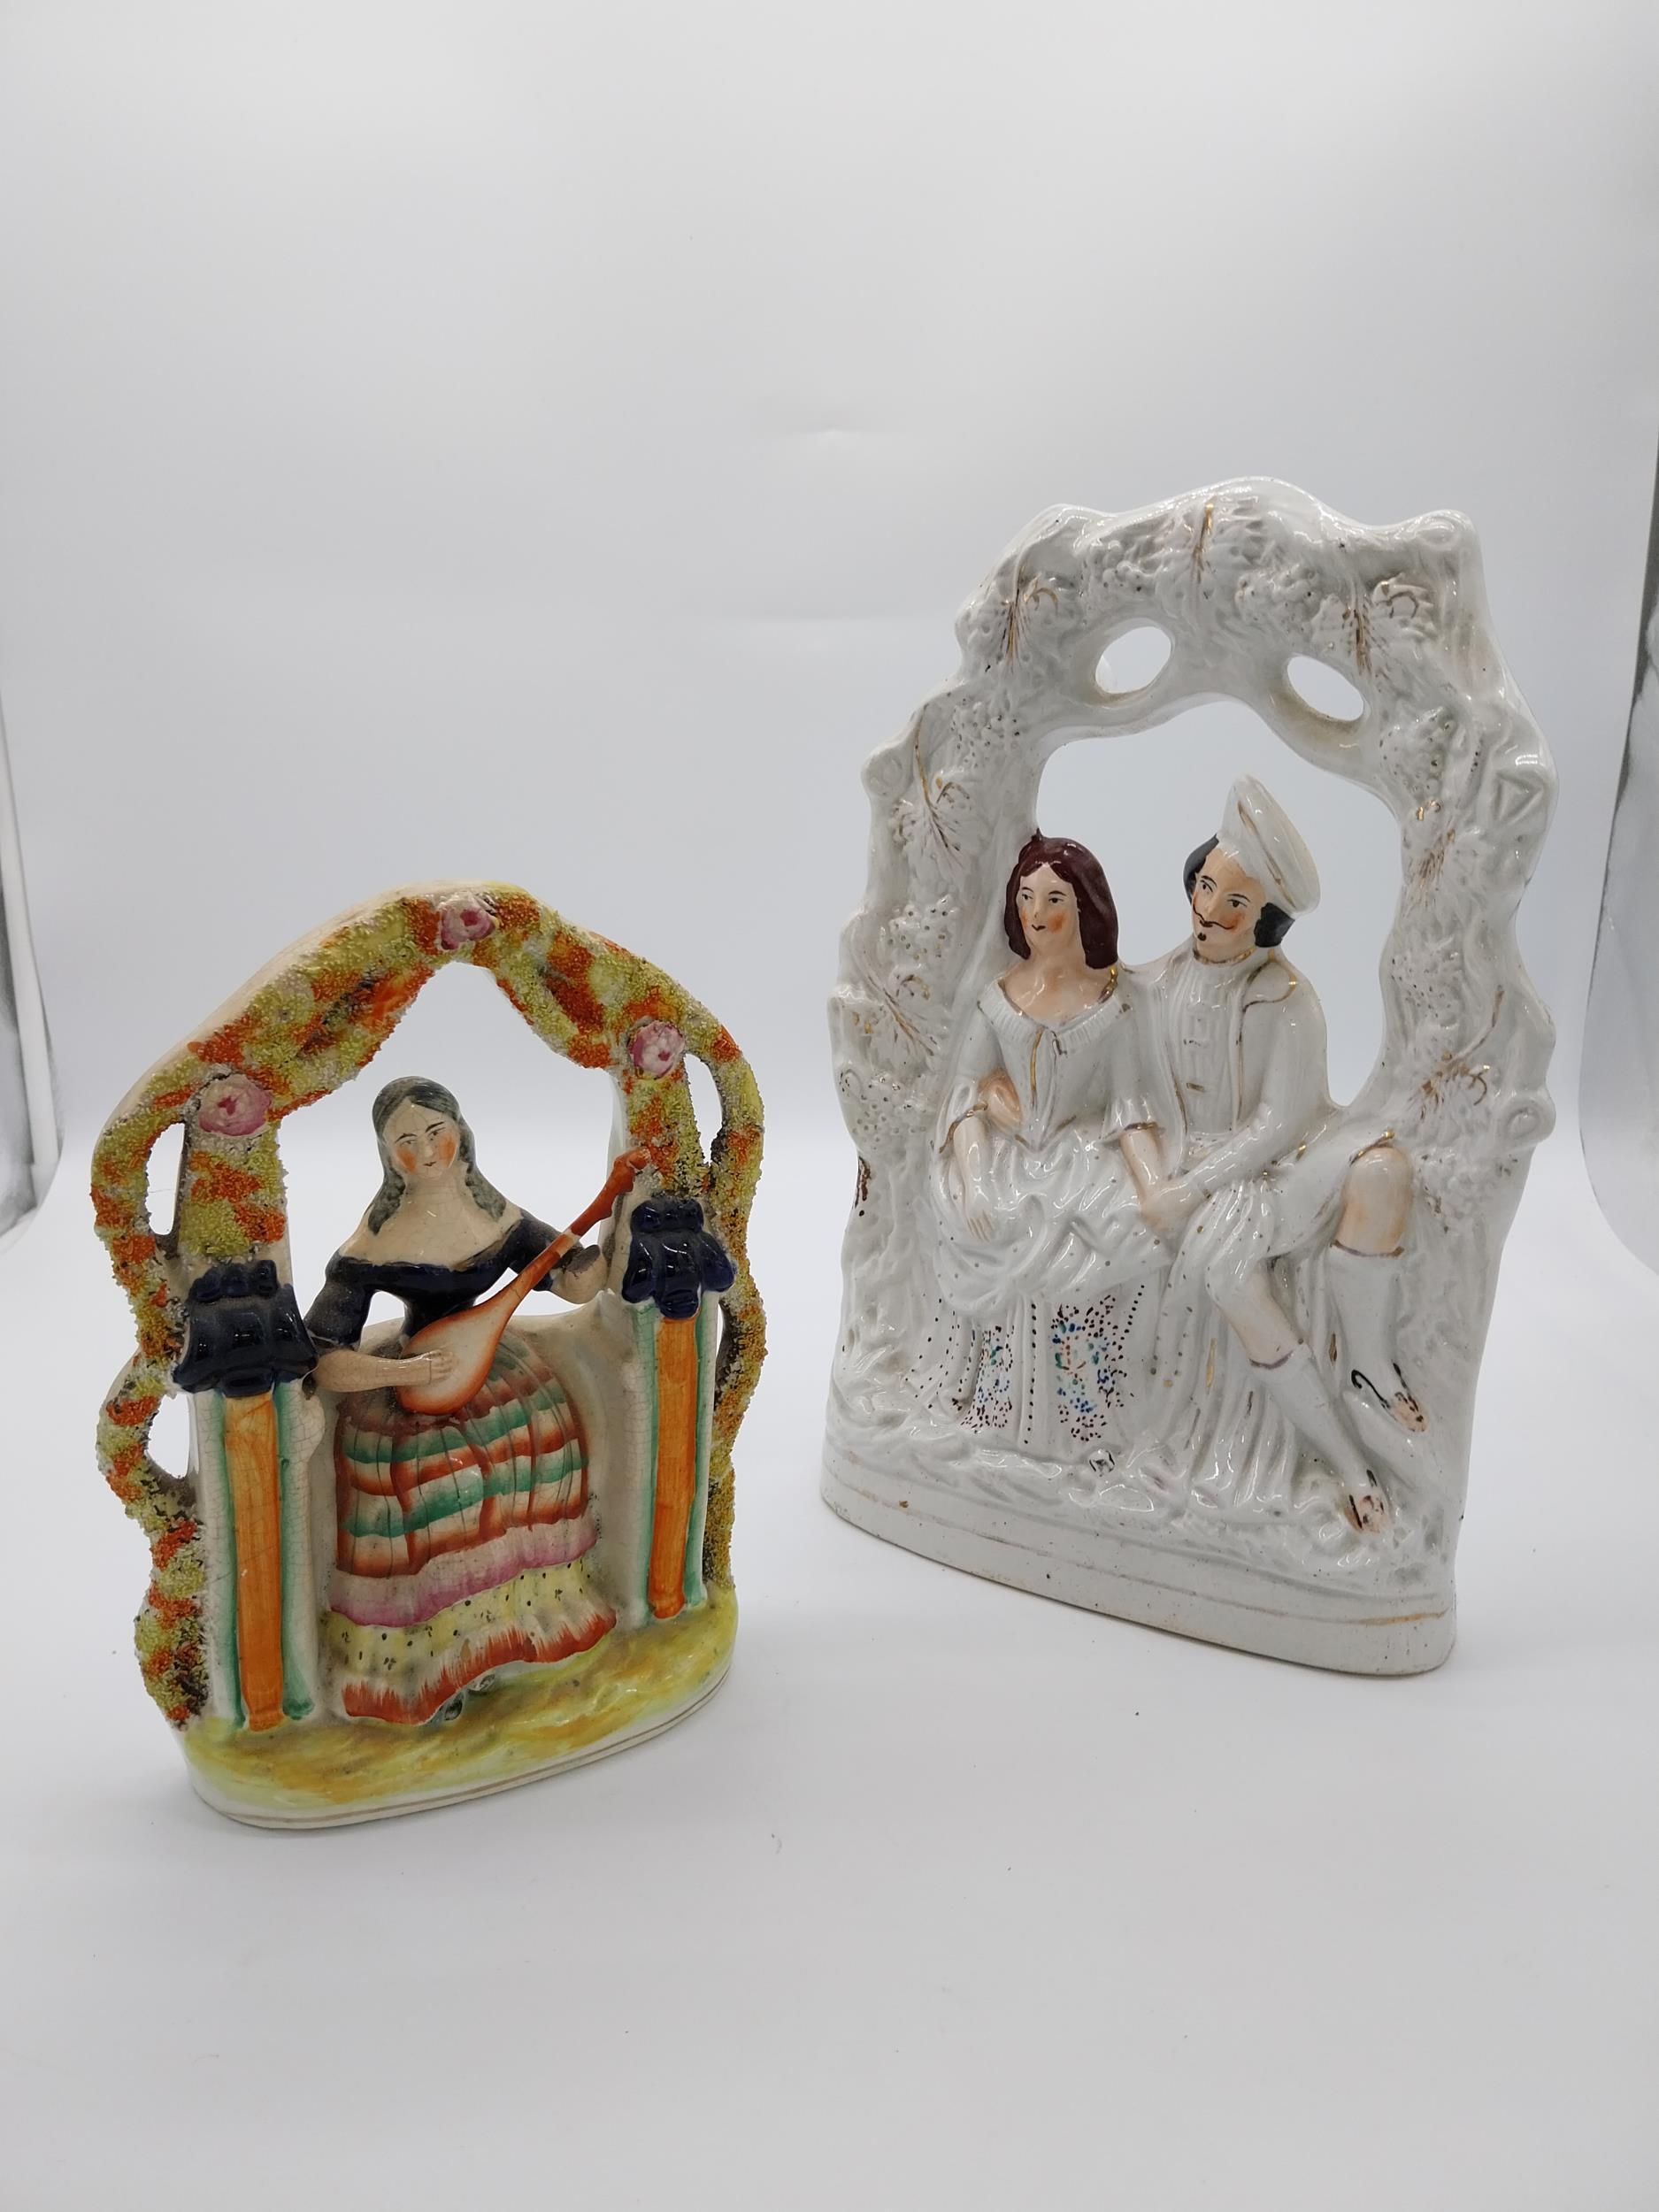 Two 19th C. Staffordshire figurines {36 cm H x 24 cm W x 10 and 25 cm H x 18 cm W x 9 cm D}.